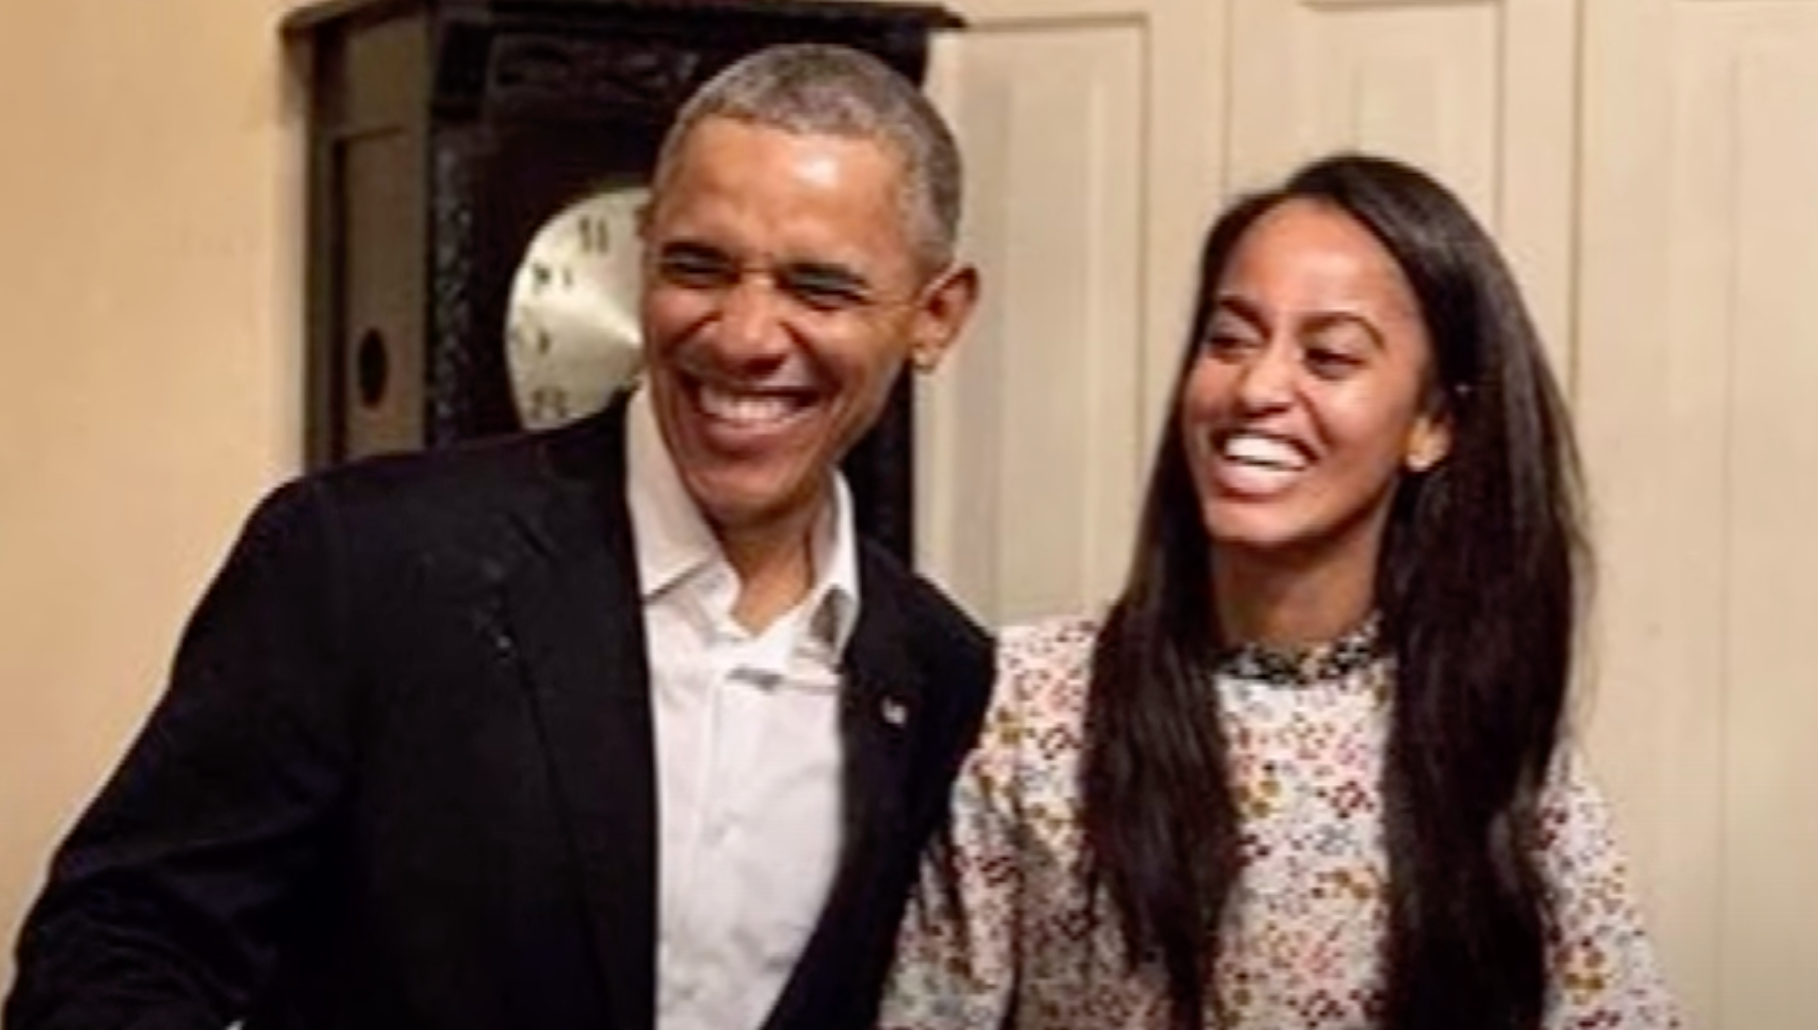 Malia Obama Spotted In New York … Arm In Arm w/ Her Female Companion!